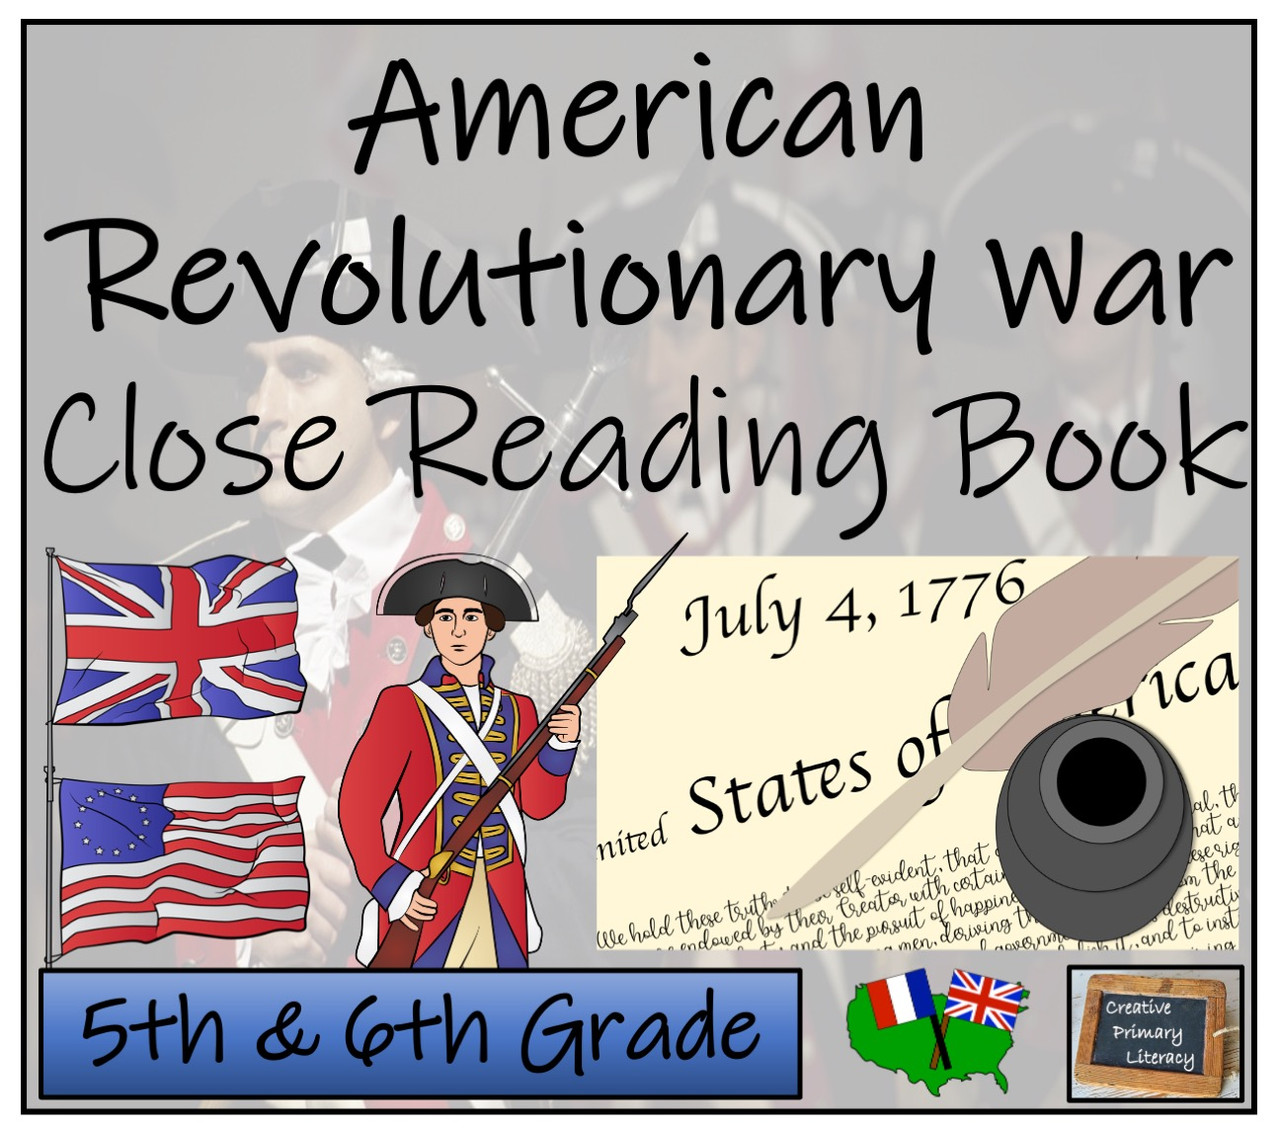 American Revolutionary War Close Reading Activity Book | 5th Grade & 6th Grade